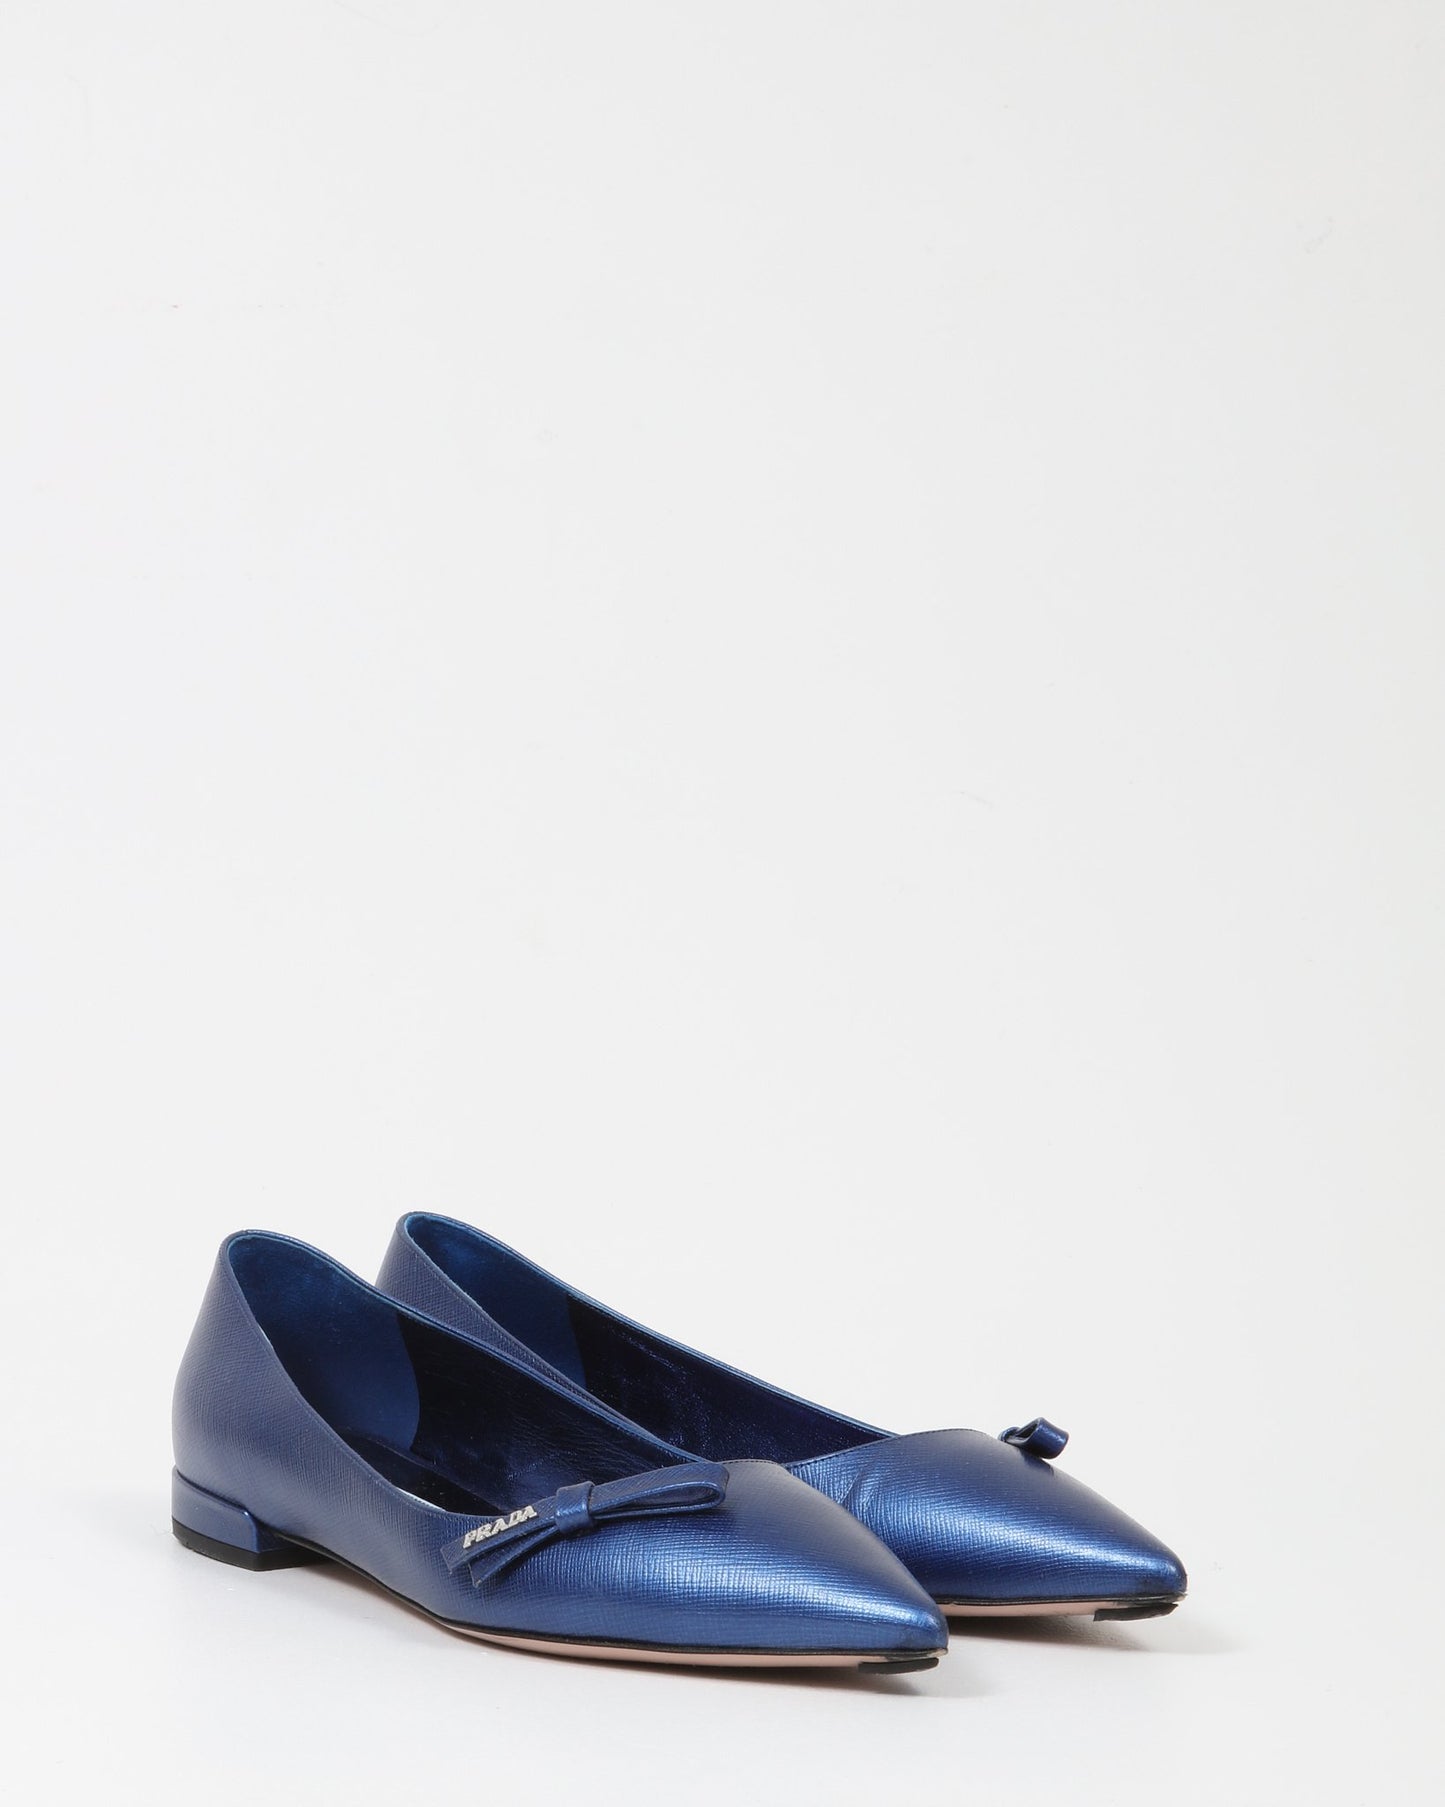 Prada Chaussures plates à bout pointu Saffiano bleu métallisé - 39